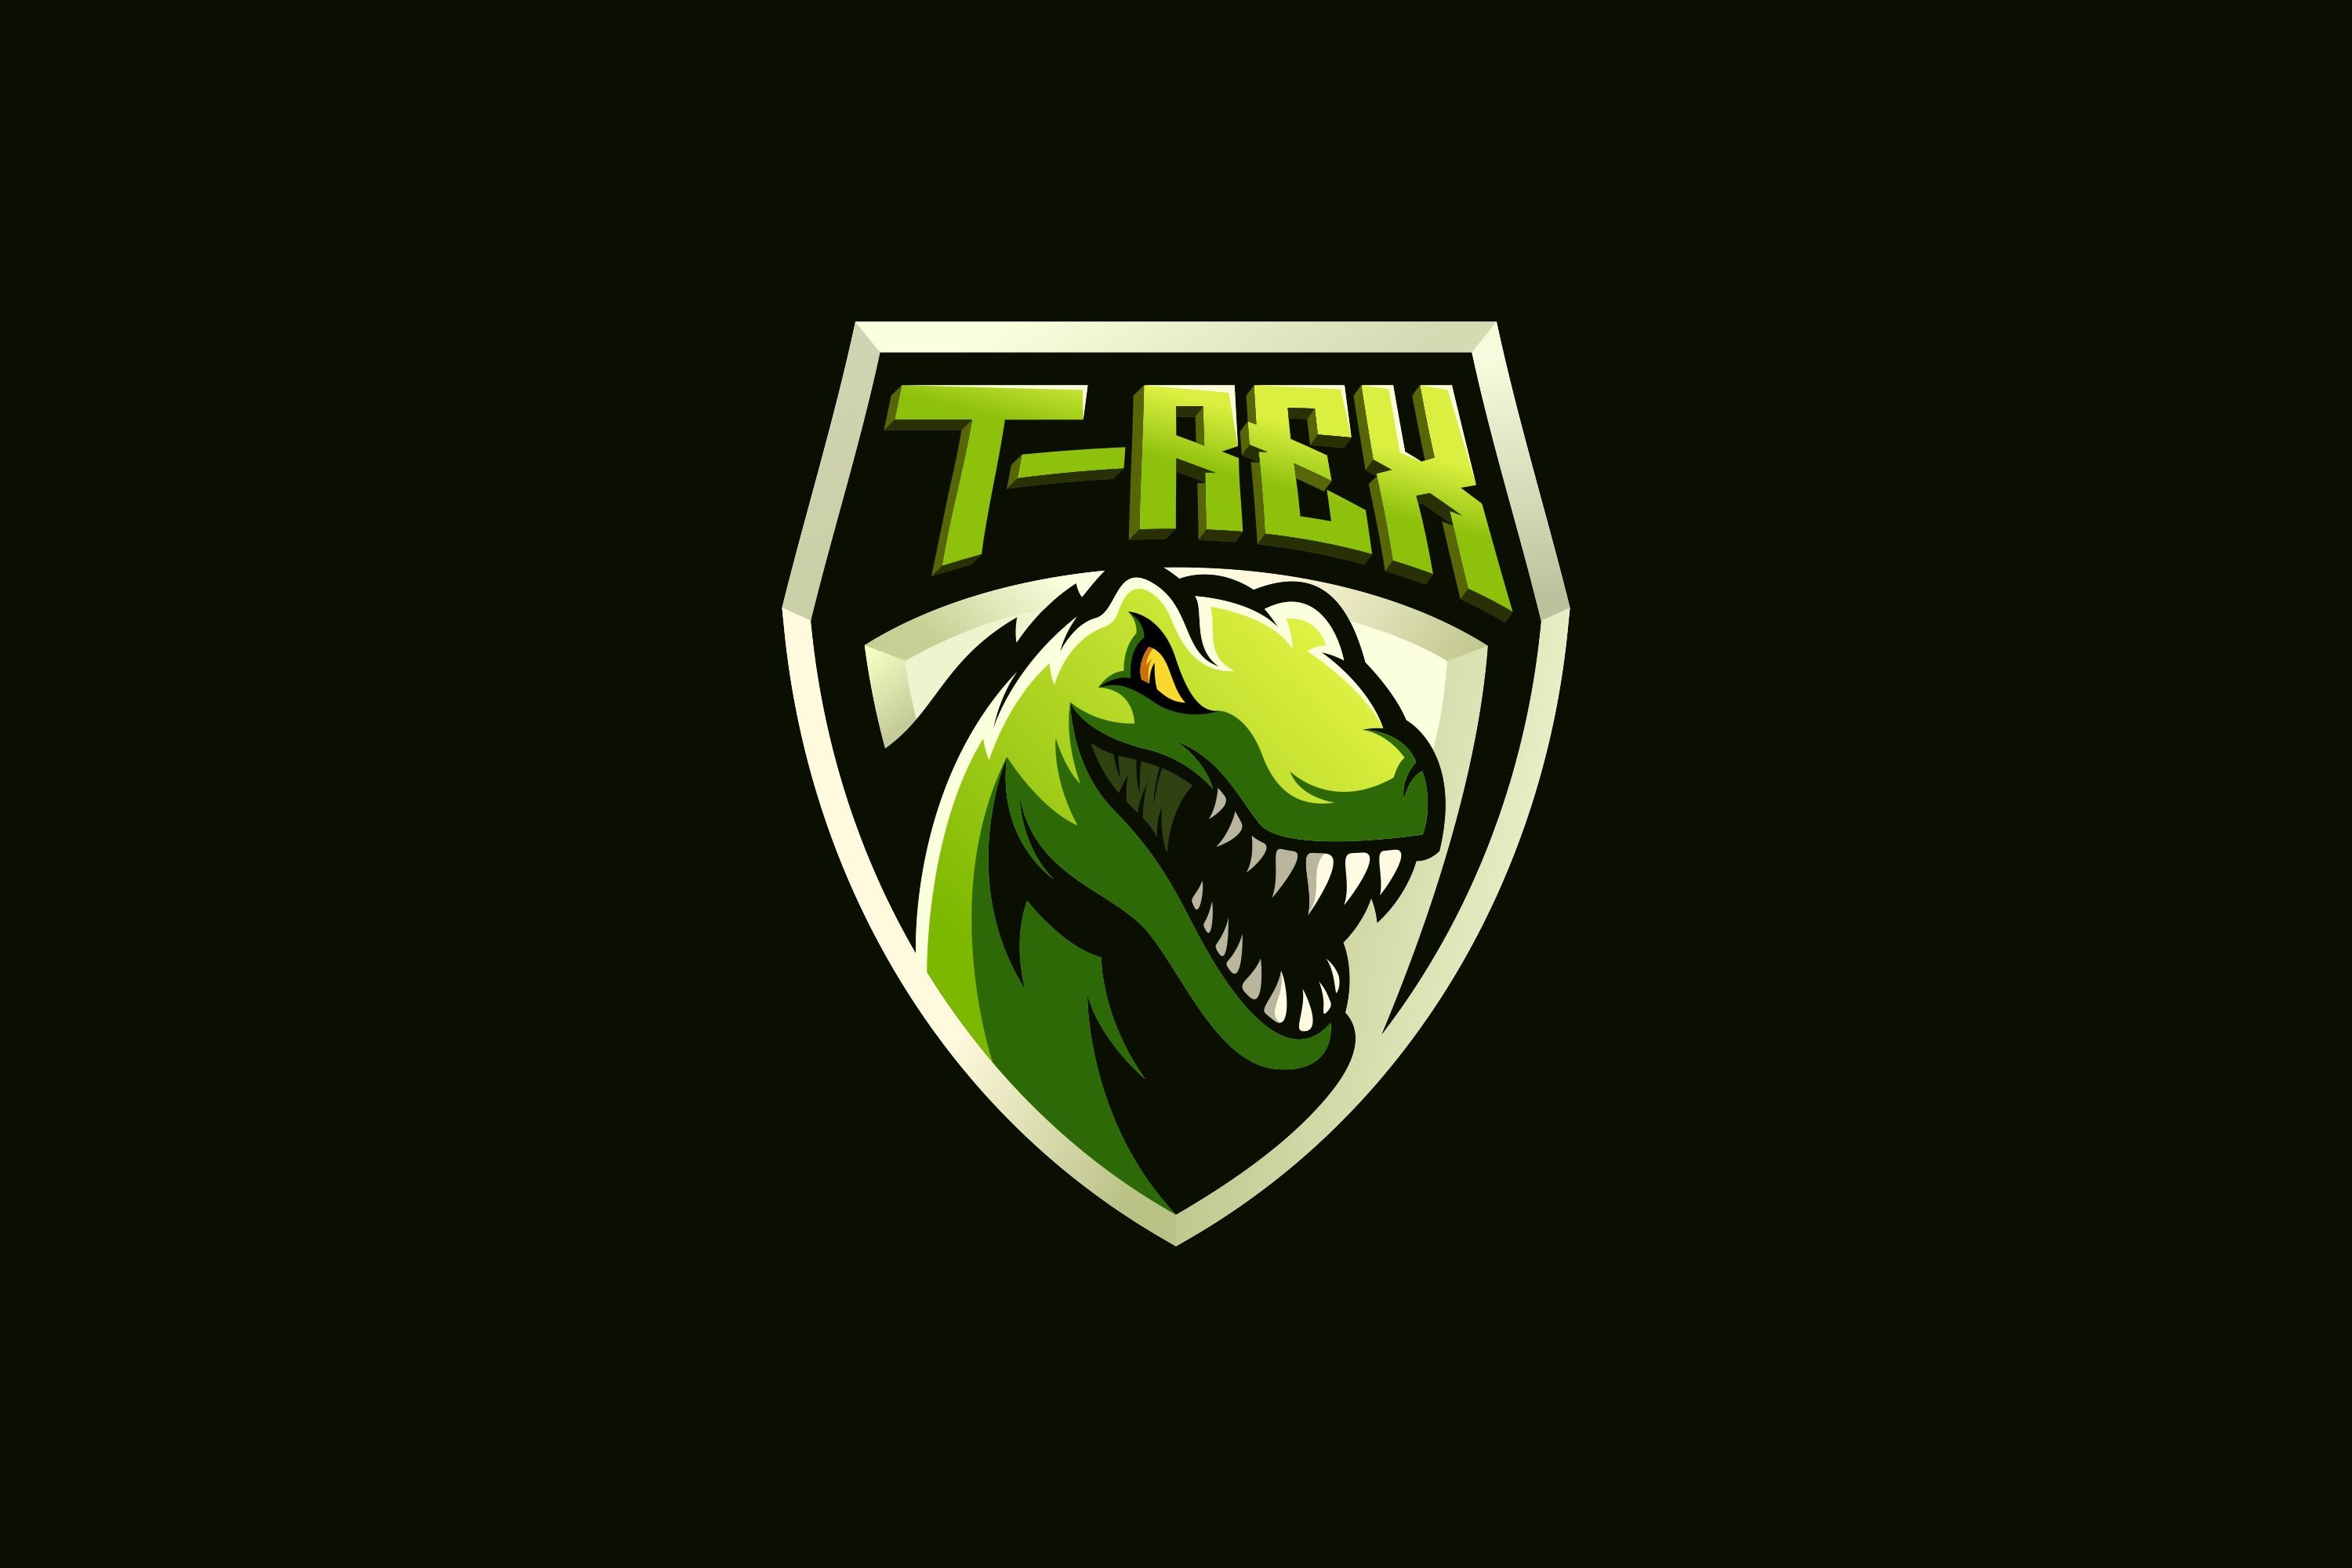 T-rex logo design cover image.